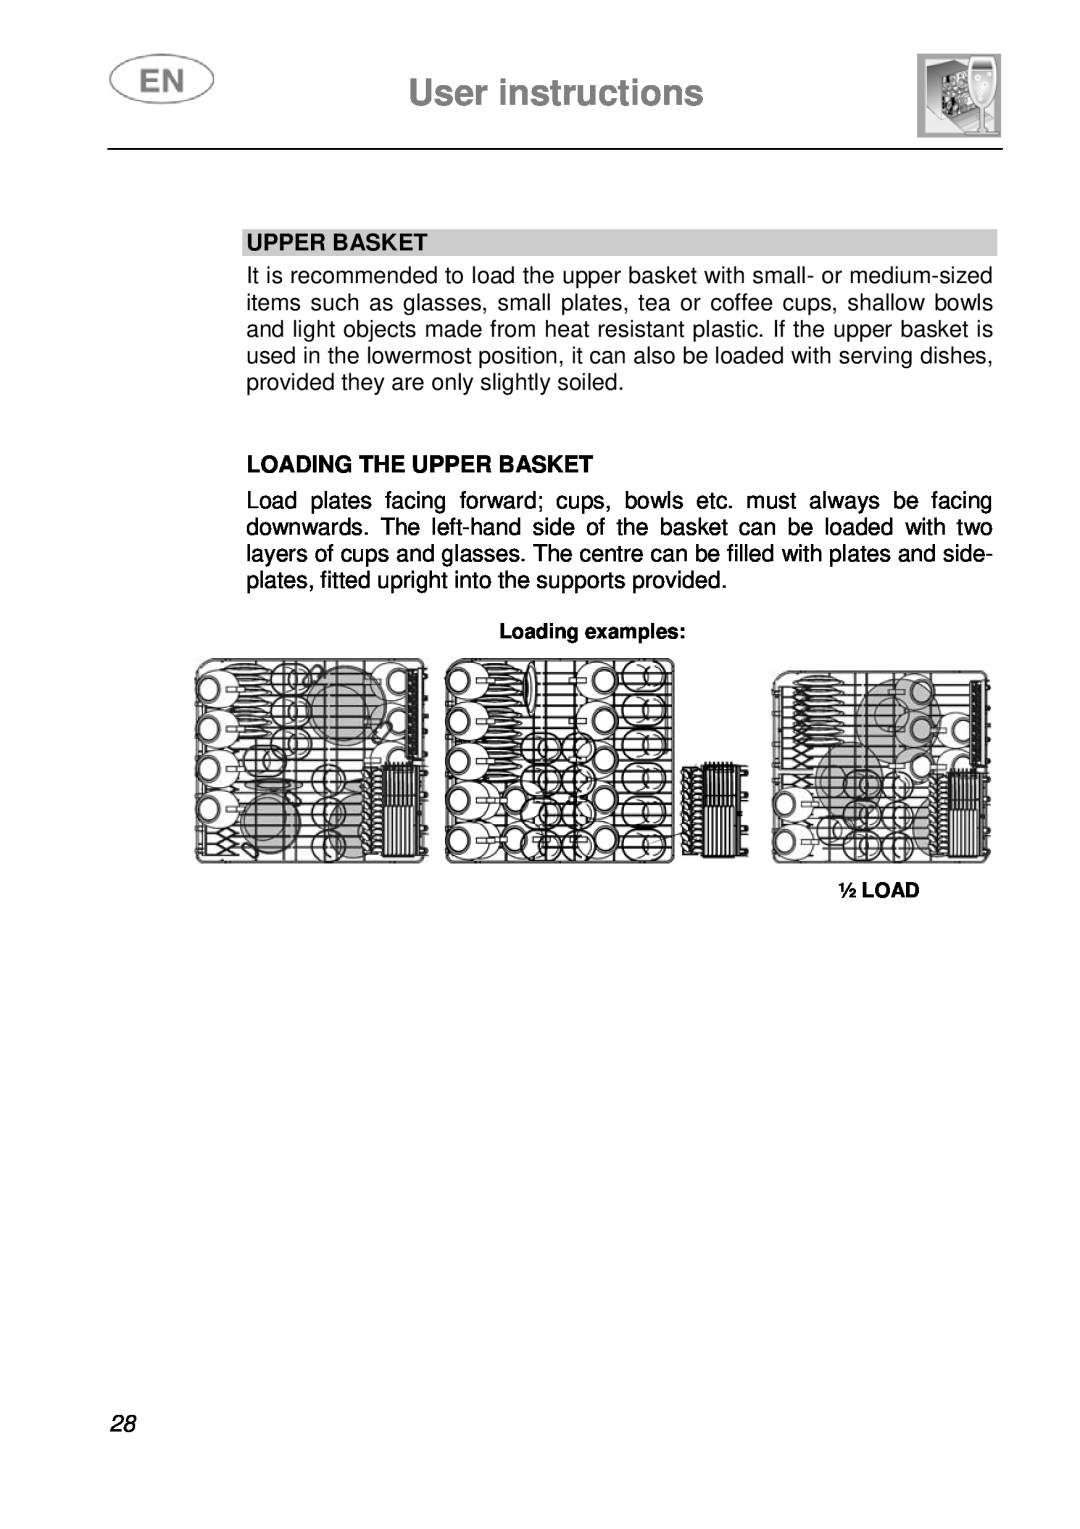 Smeg LSA14X7 instruction manual User instructions, Loading The Upper Basket 